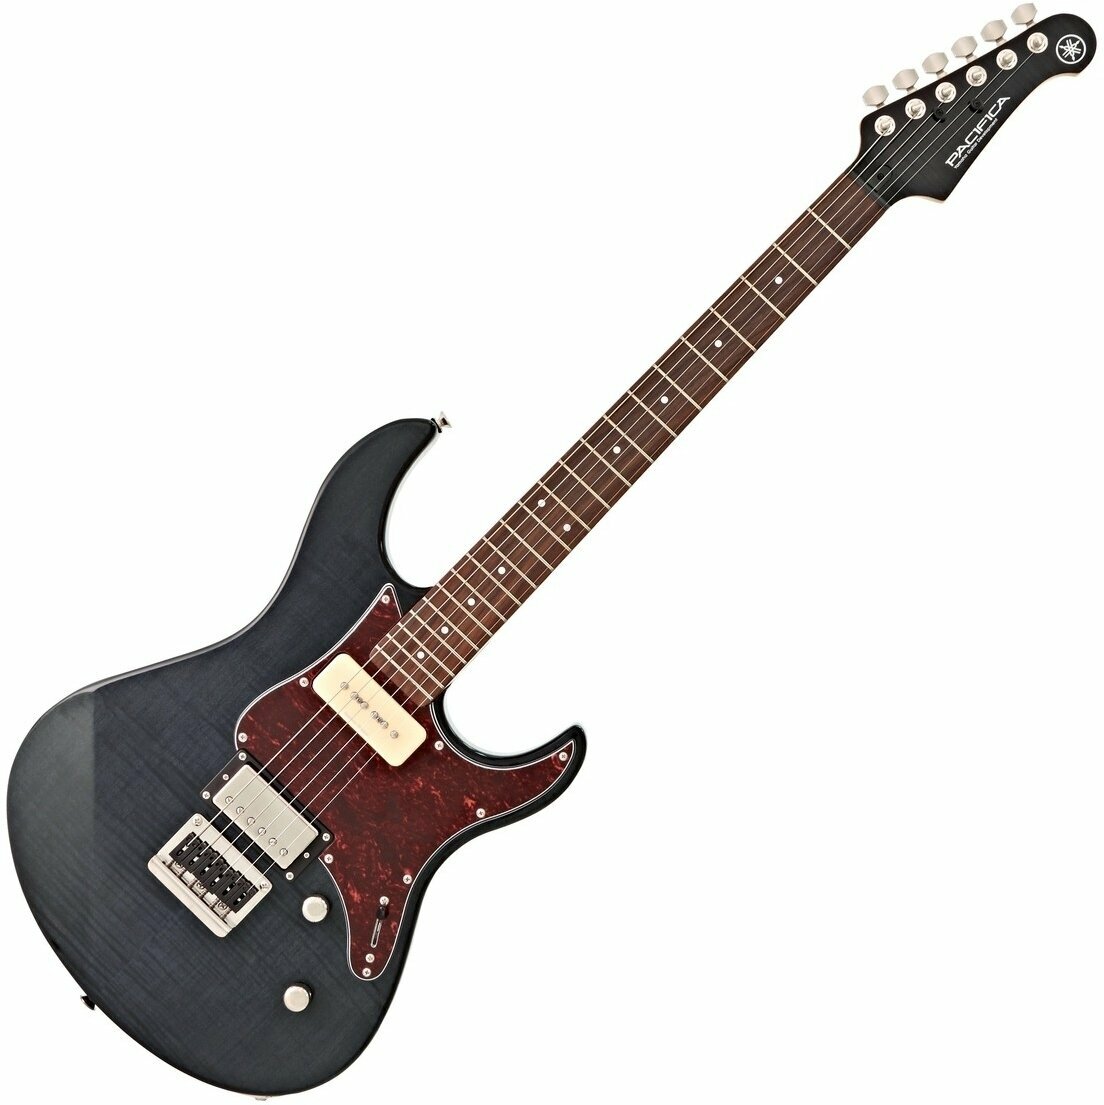 Electric guitar Yamaha Pacifica 611 HFM Translucent Black